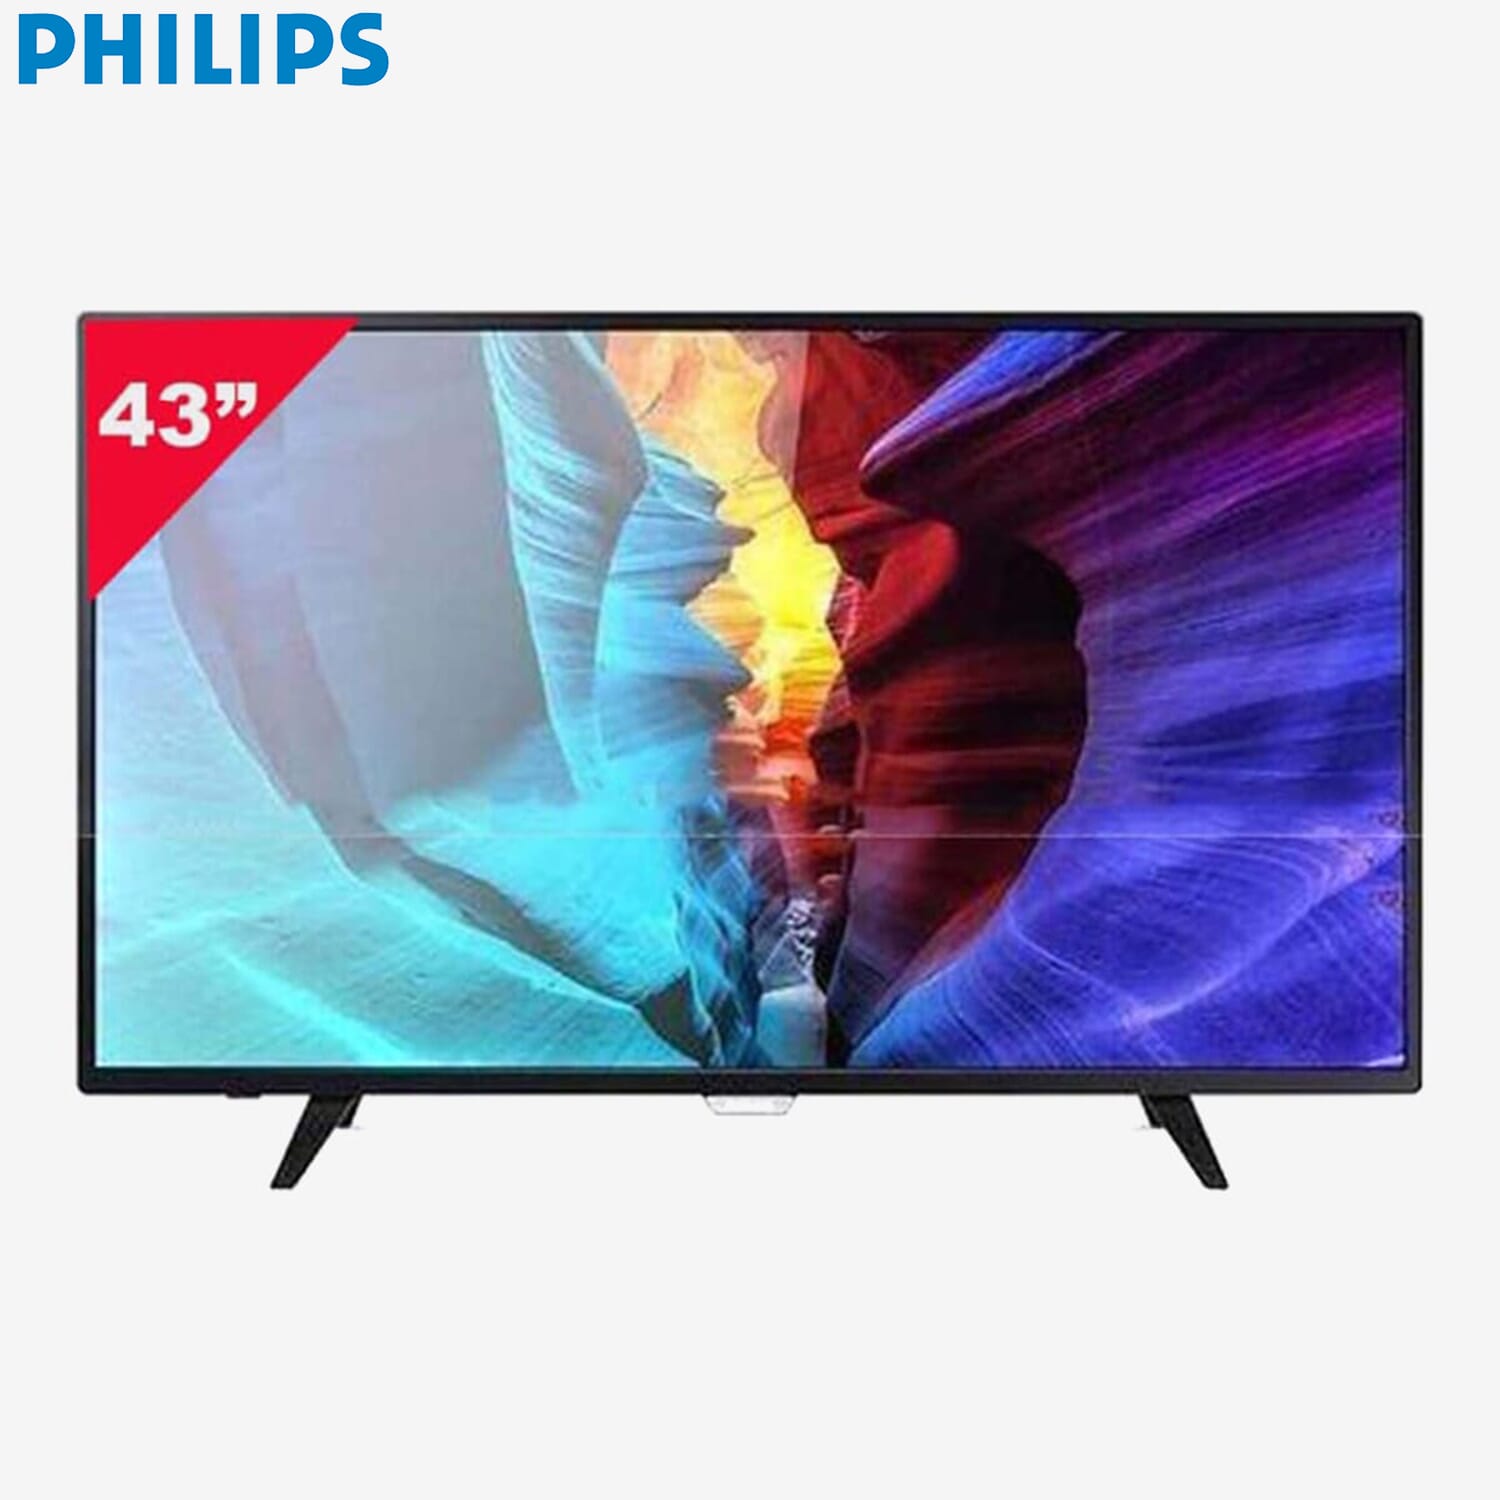 Philips 6000 series. Телевизор Philips 56 диагональ. Телевизор Philips 3500 Series. Смарт телевизор Филипс диагональ 46 2012 года. Телевизор Philips со встроенным видеоплеером.